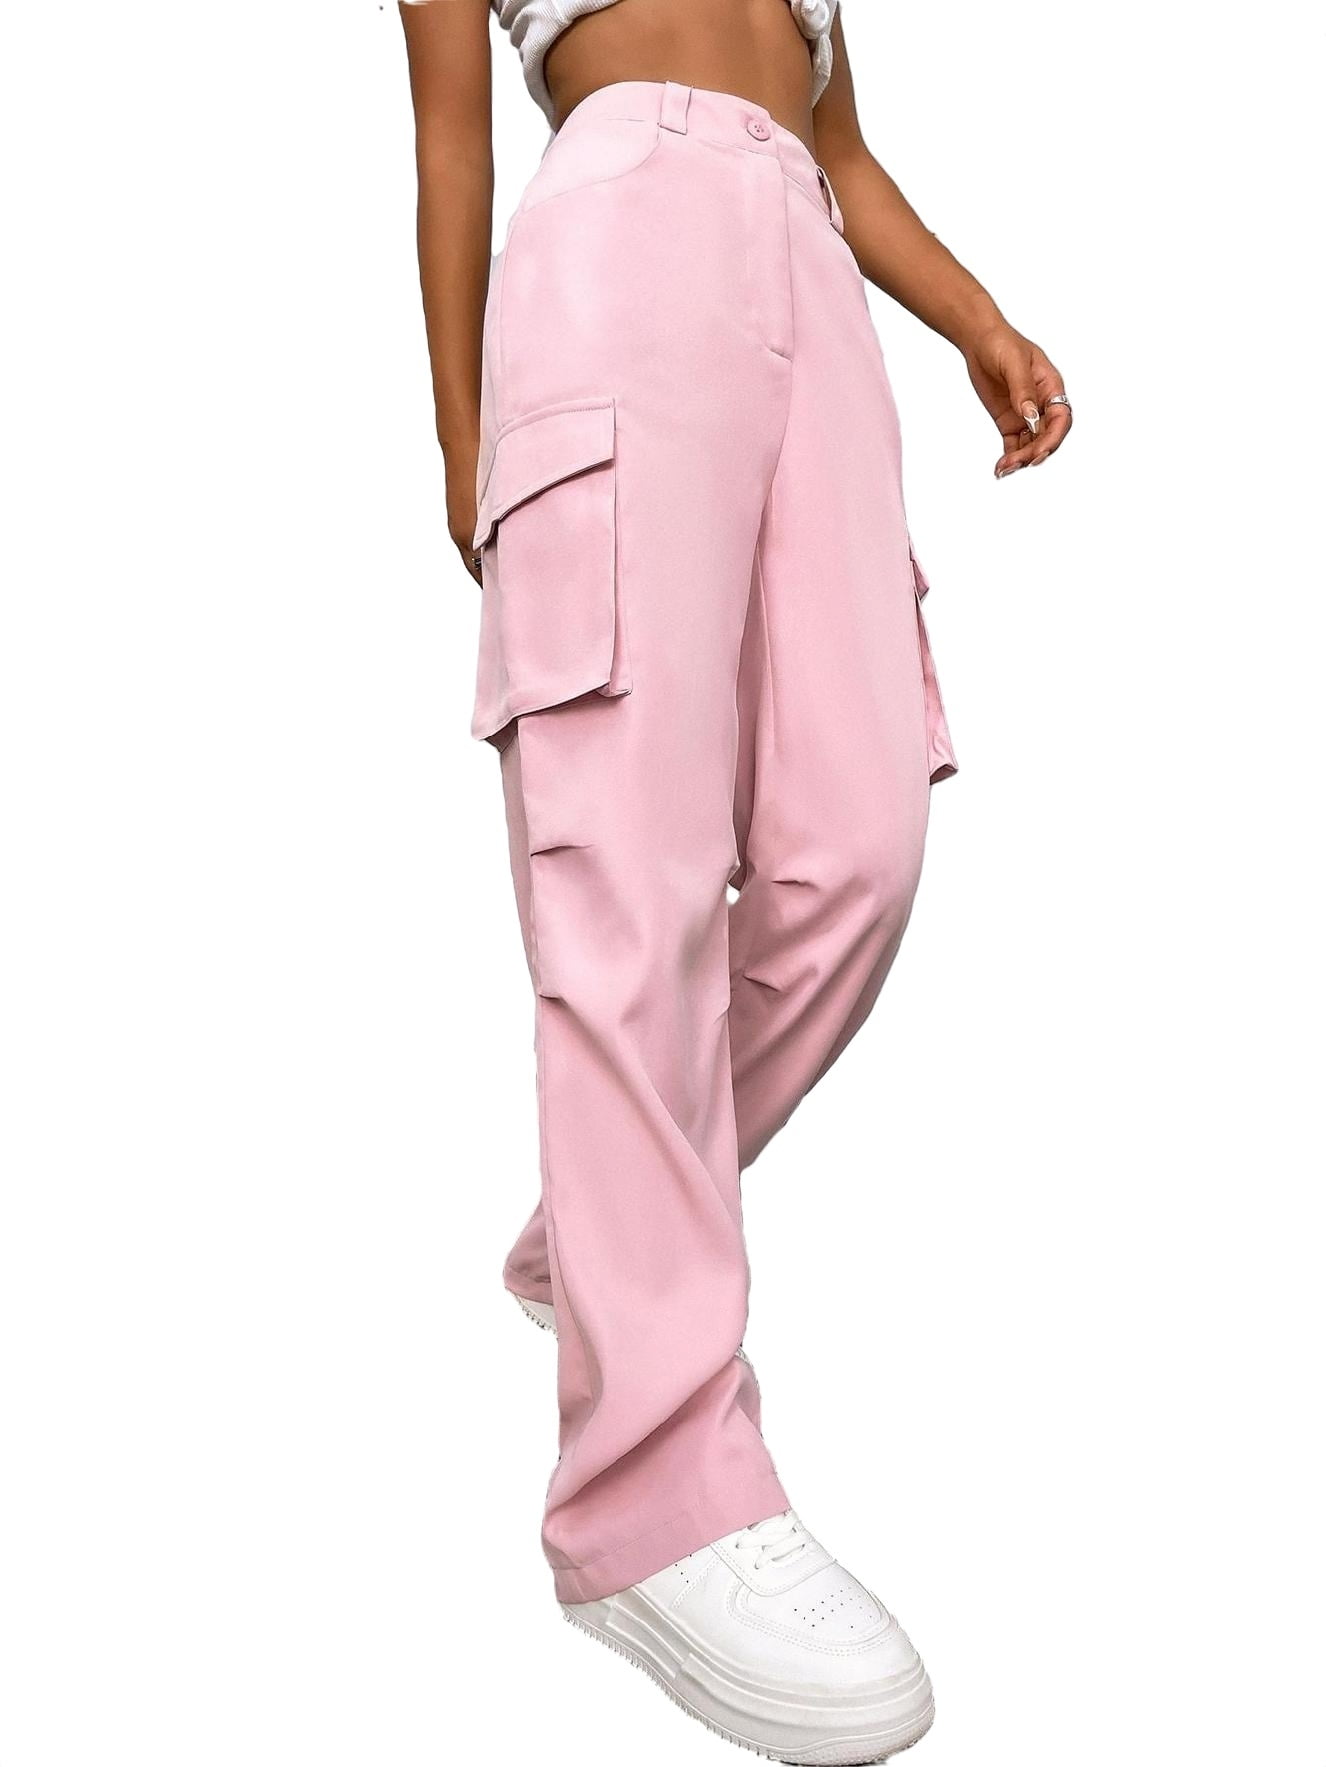 Casual Plain Cargo Pants Baby Pink Women's Pants (Women's